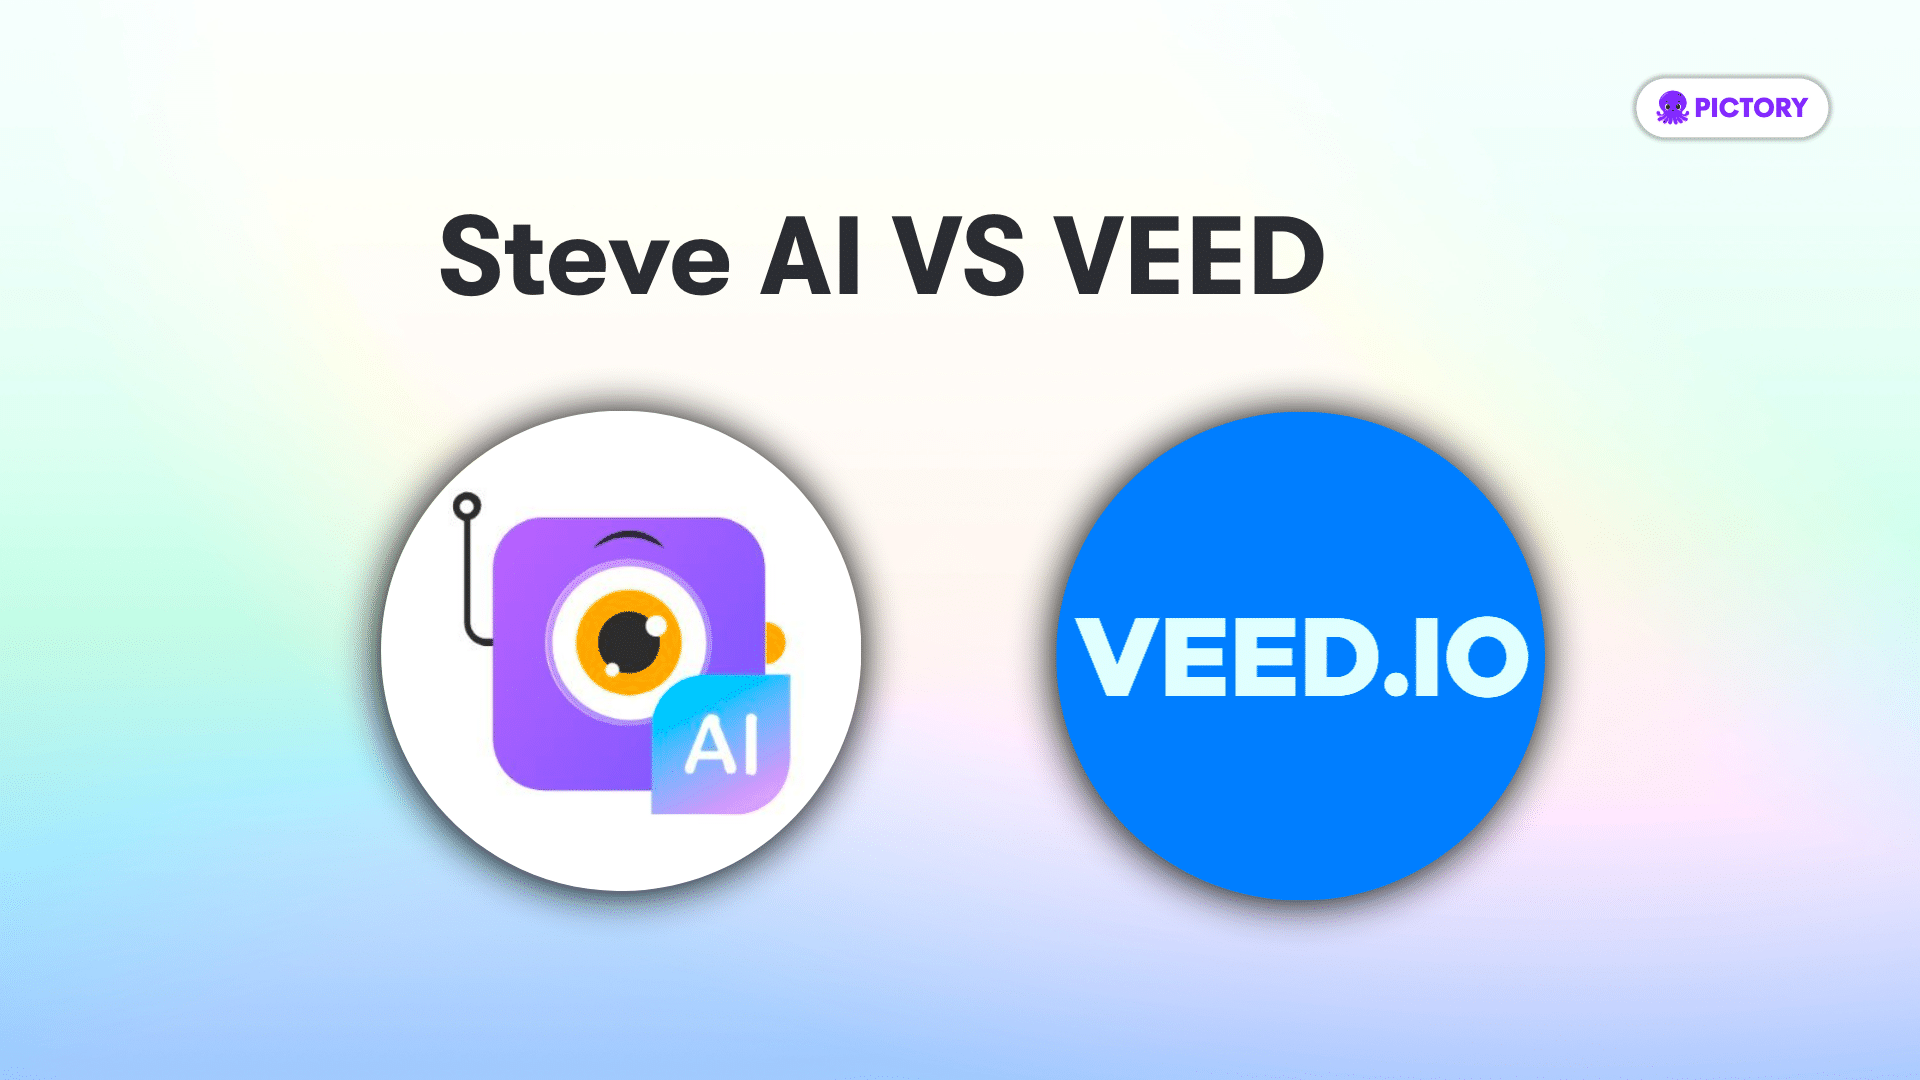 Steve AI vs VEED